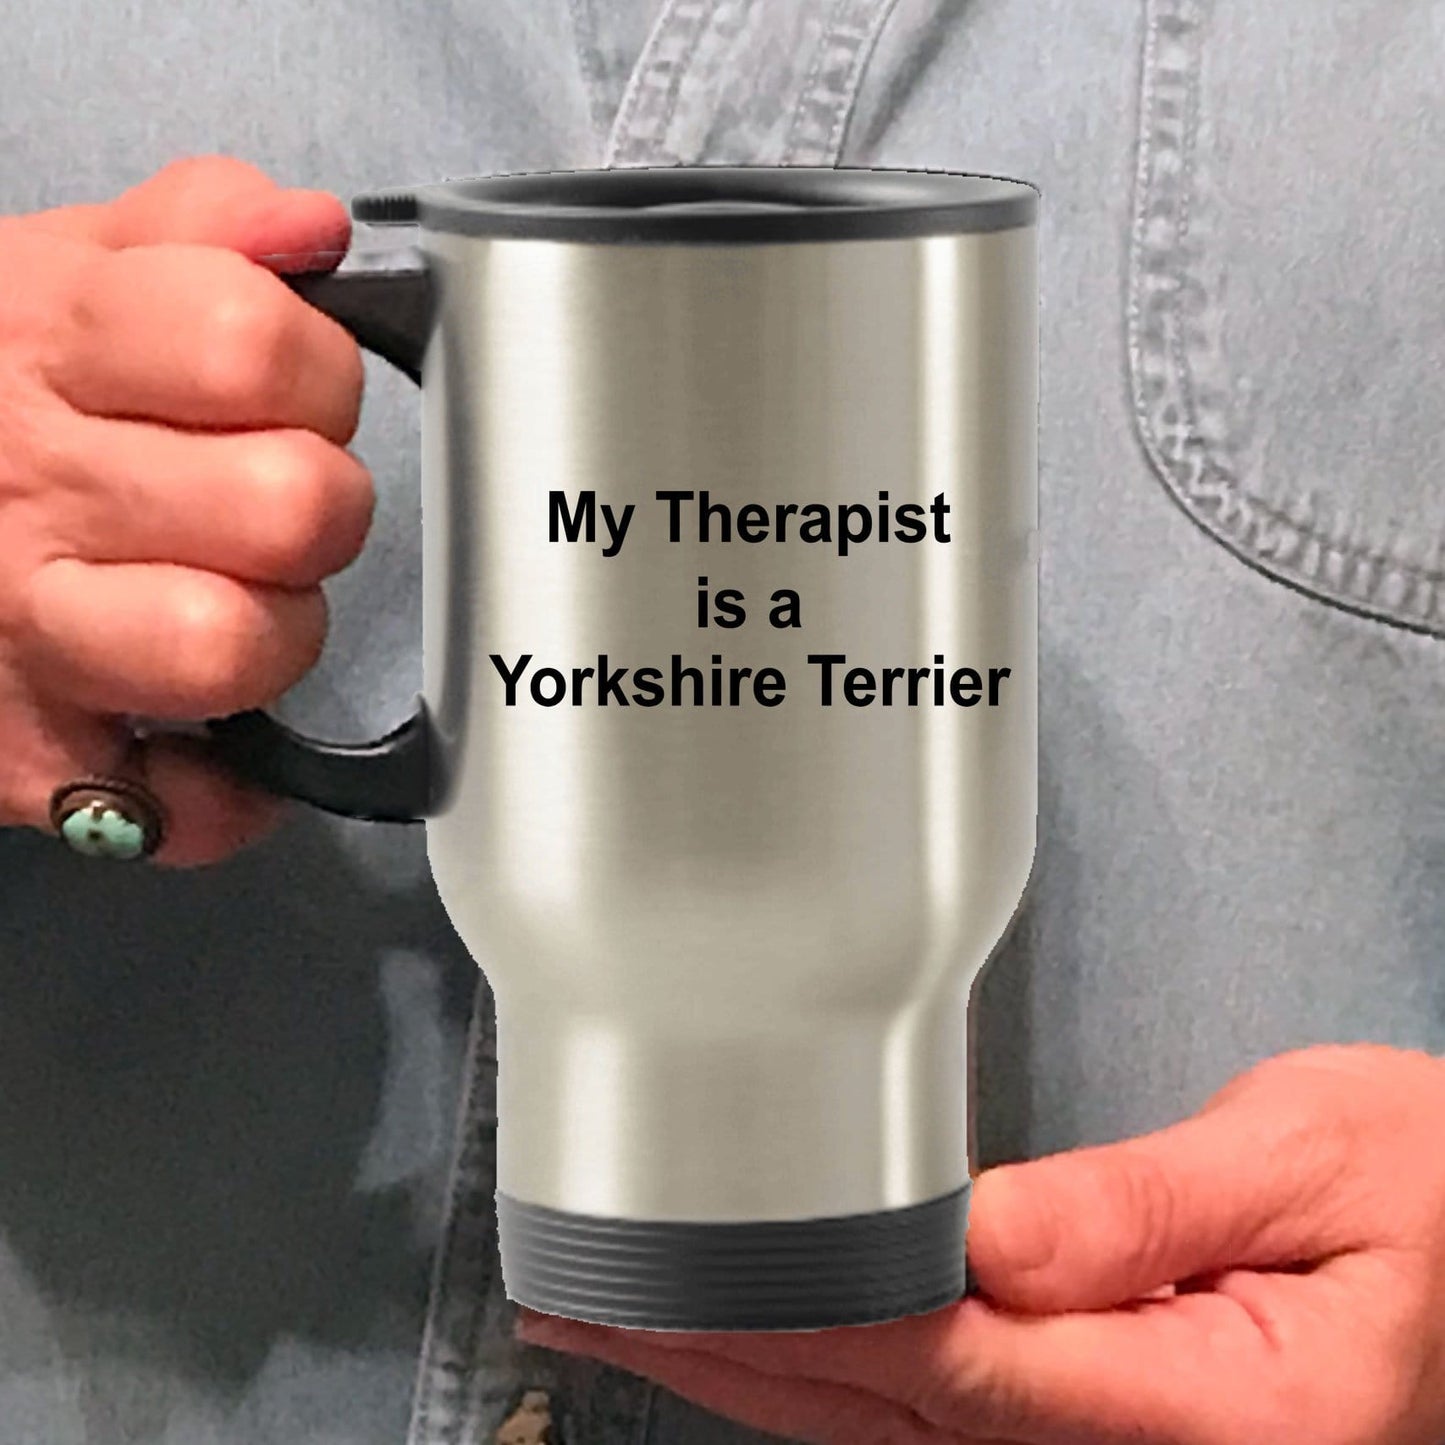 Yorkshire Terrier Dog Therapist Travel Coffee Mug